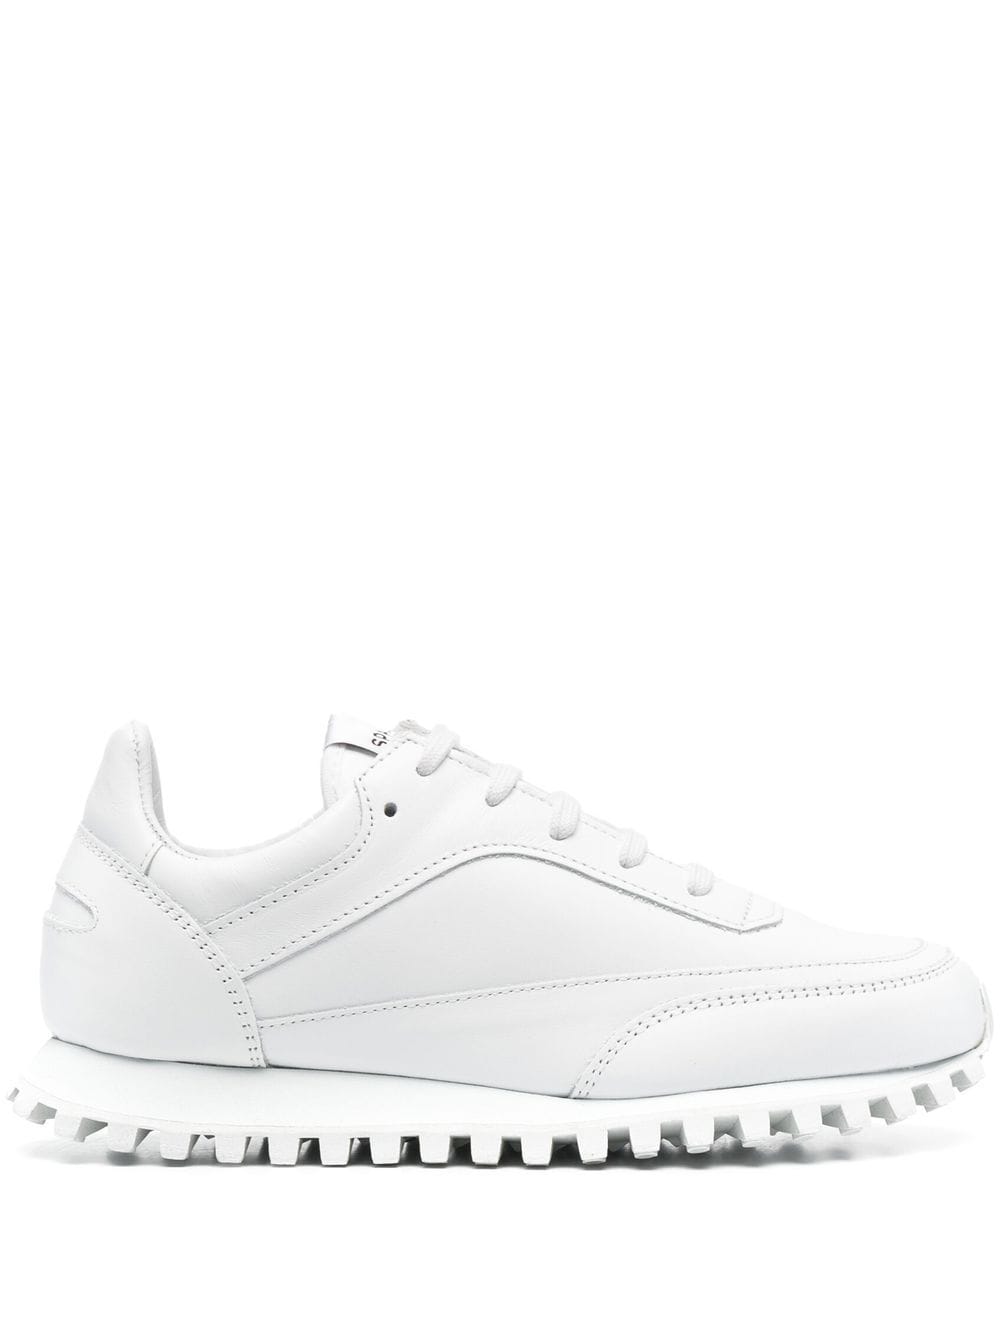 Comme Des Garçons Comme Des Garçons X Spalwart Panelled Low-top Sneakers In White